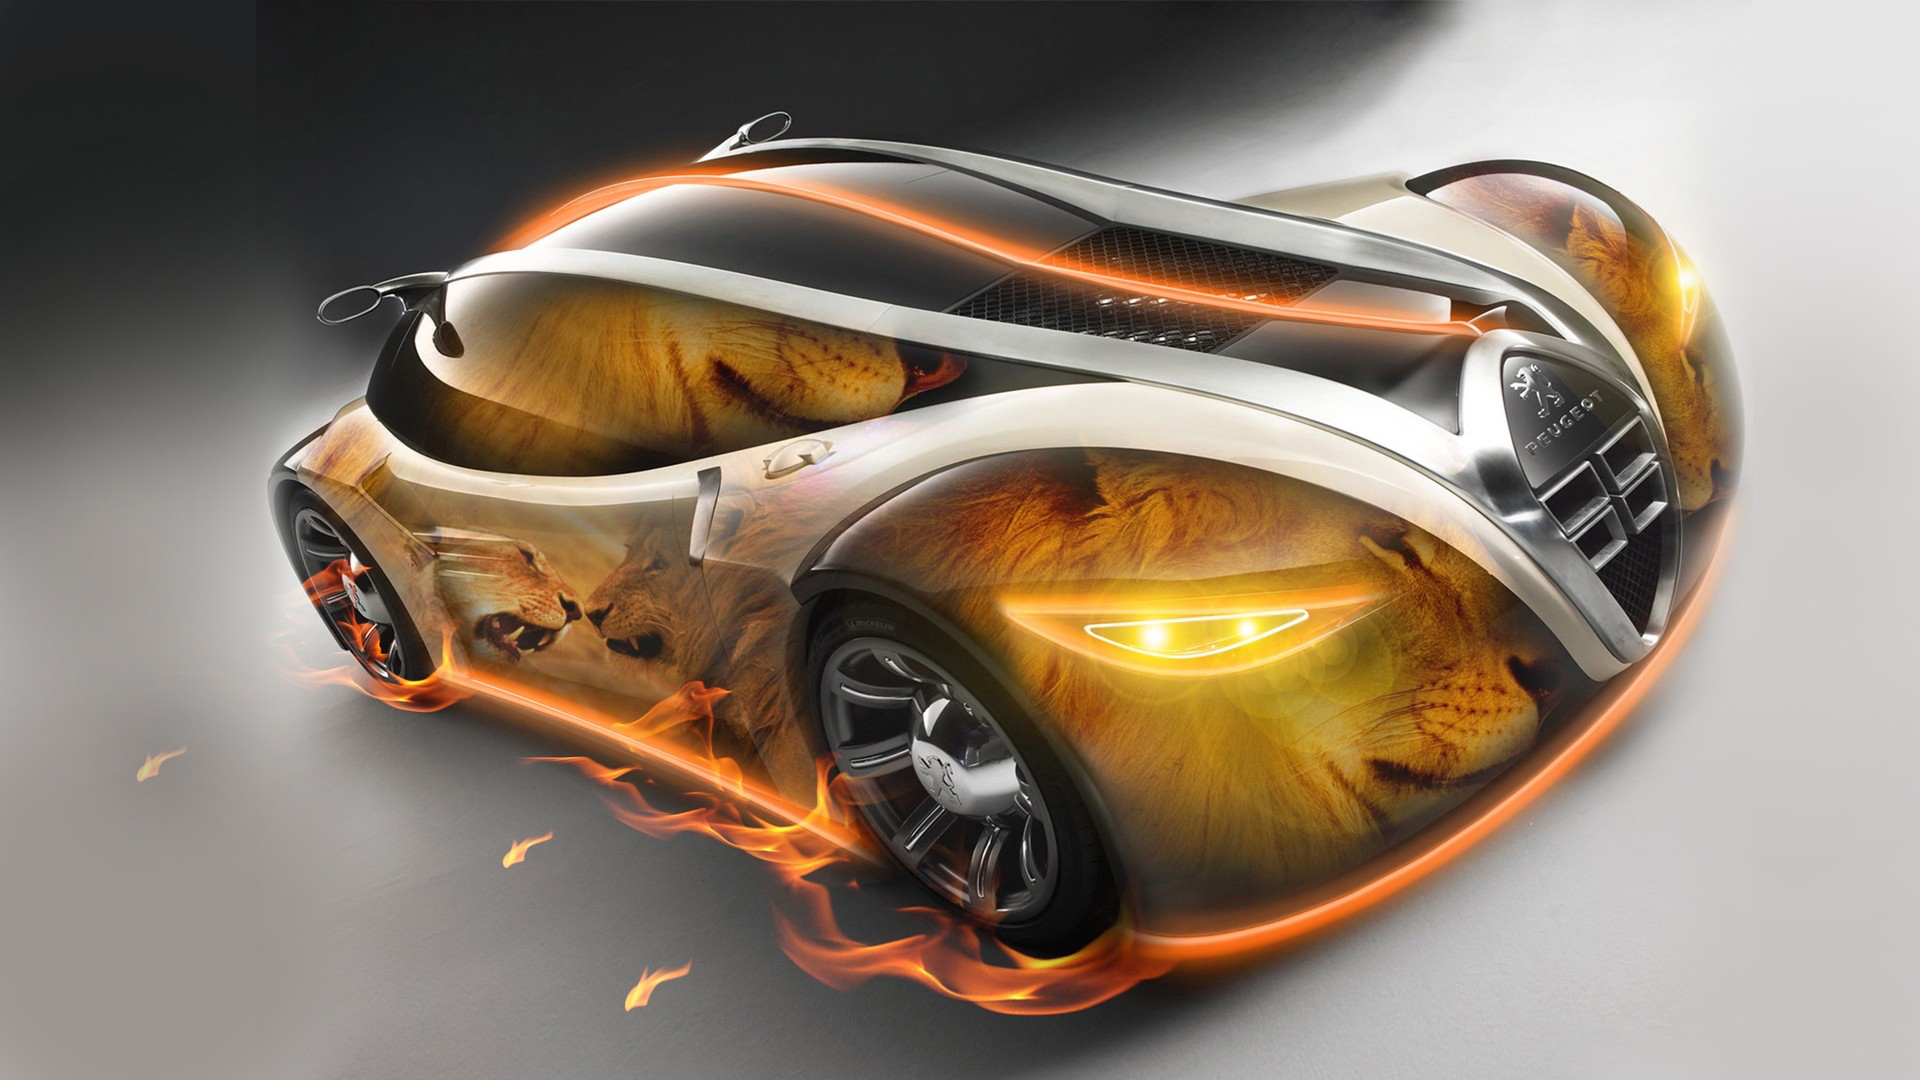 Peugeot concept car effects Wallpapers HD, HD Desktop Wallpapers